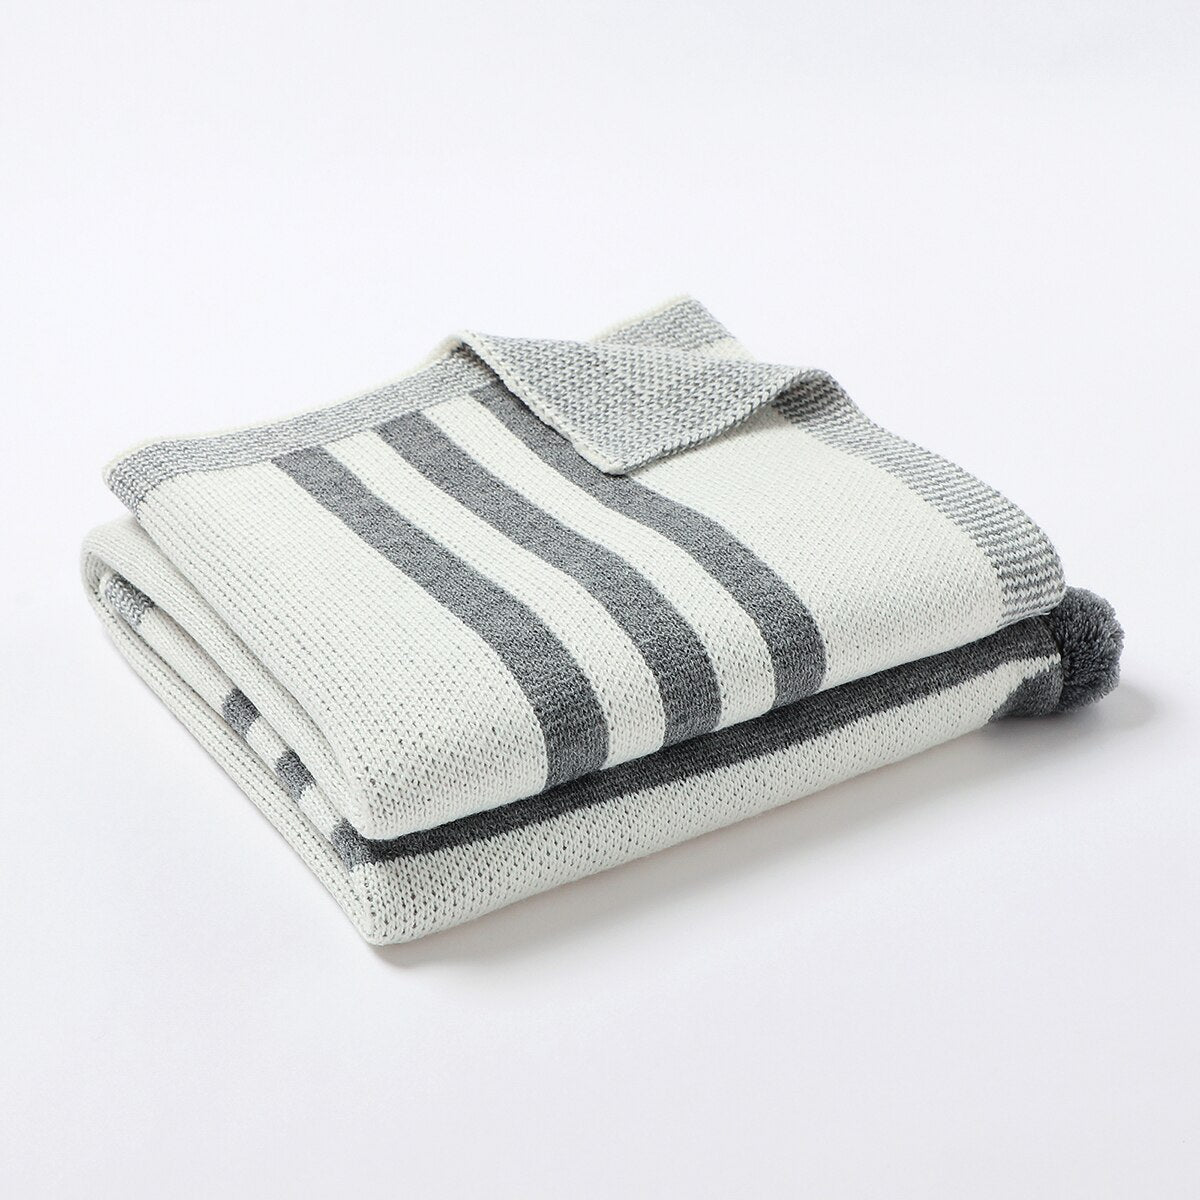 Baby Soft Sleep Knitted Blanket, 100*80 cm.